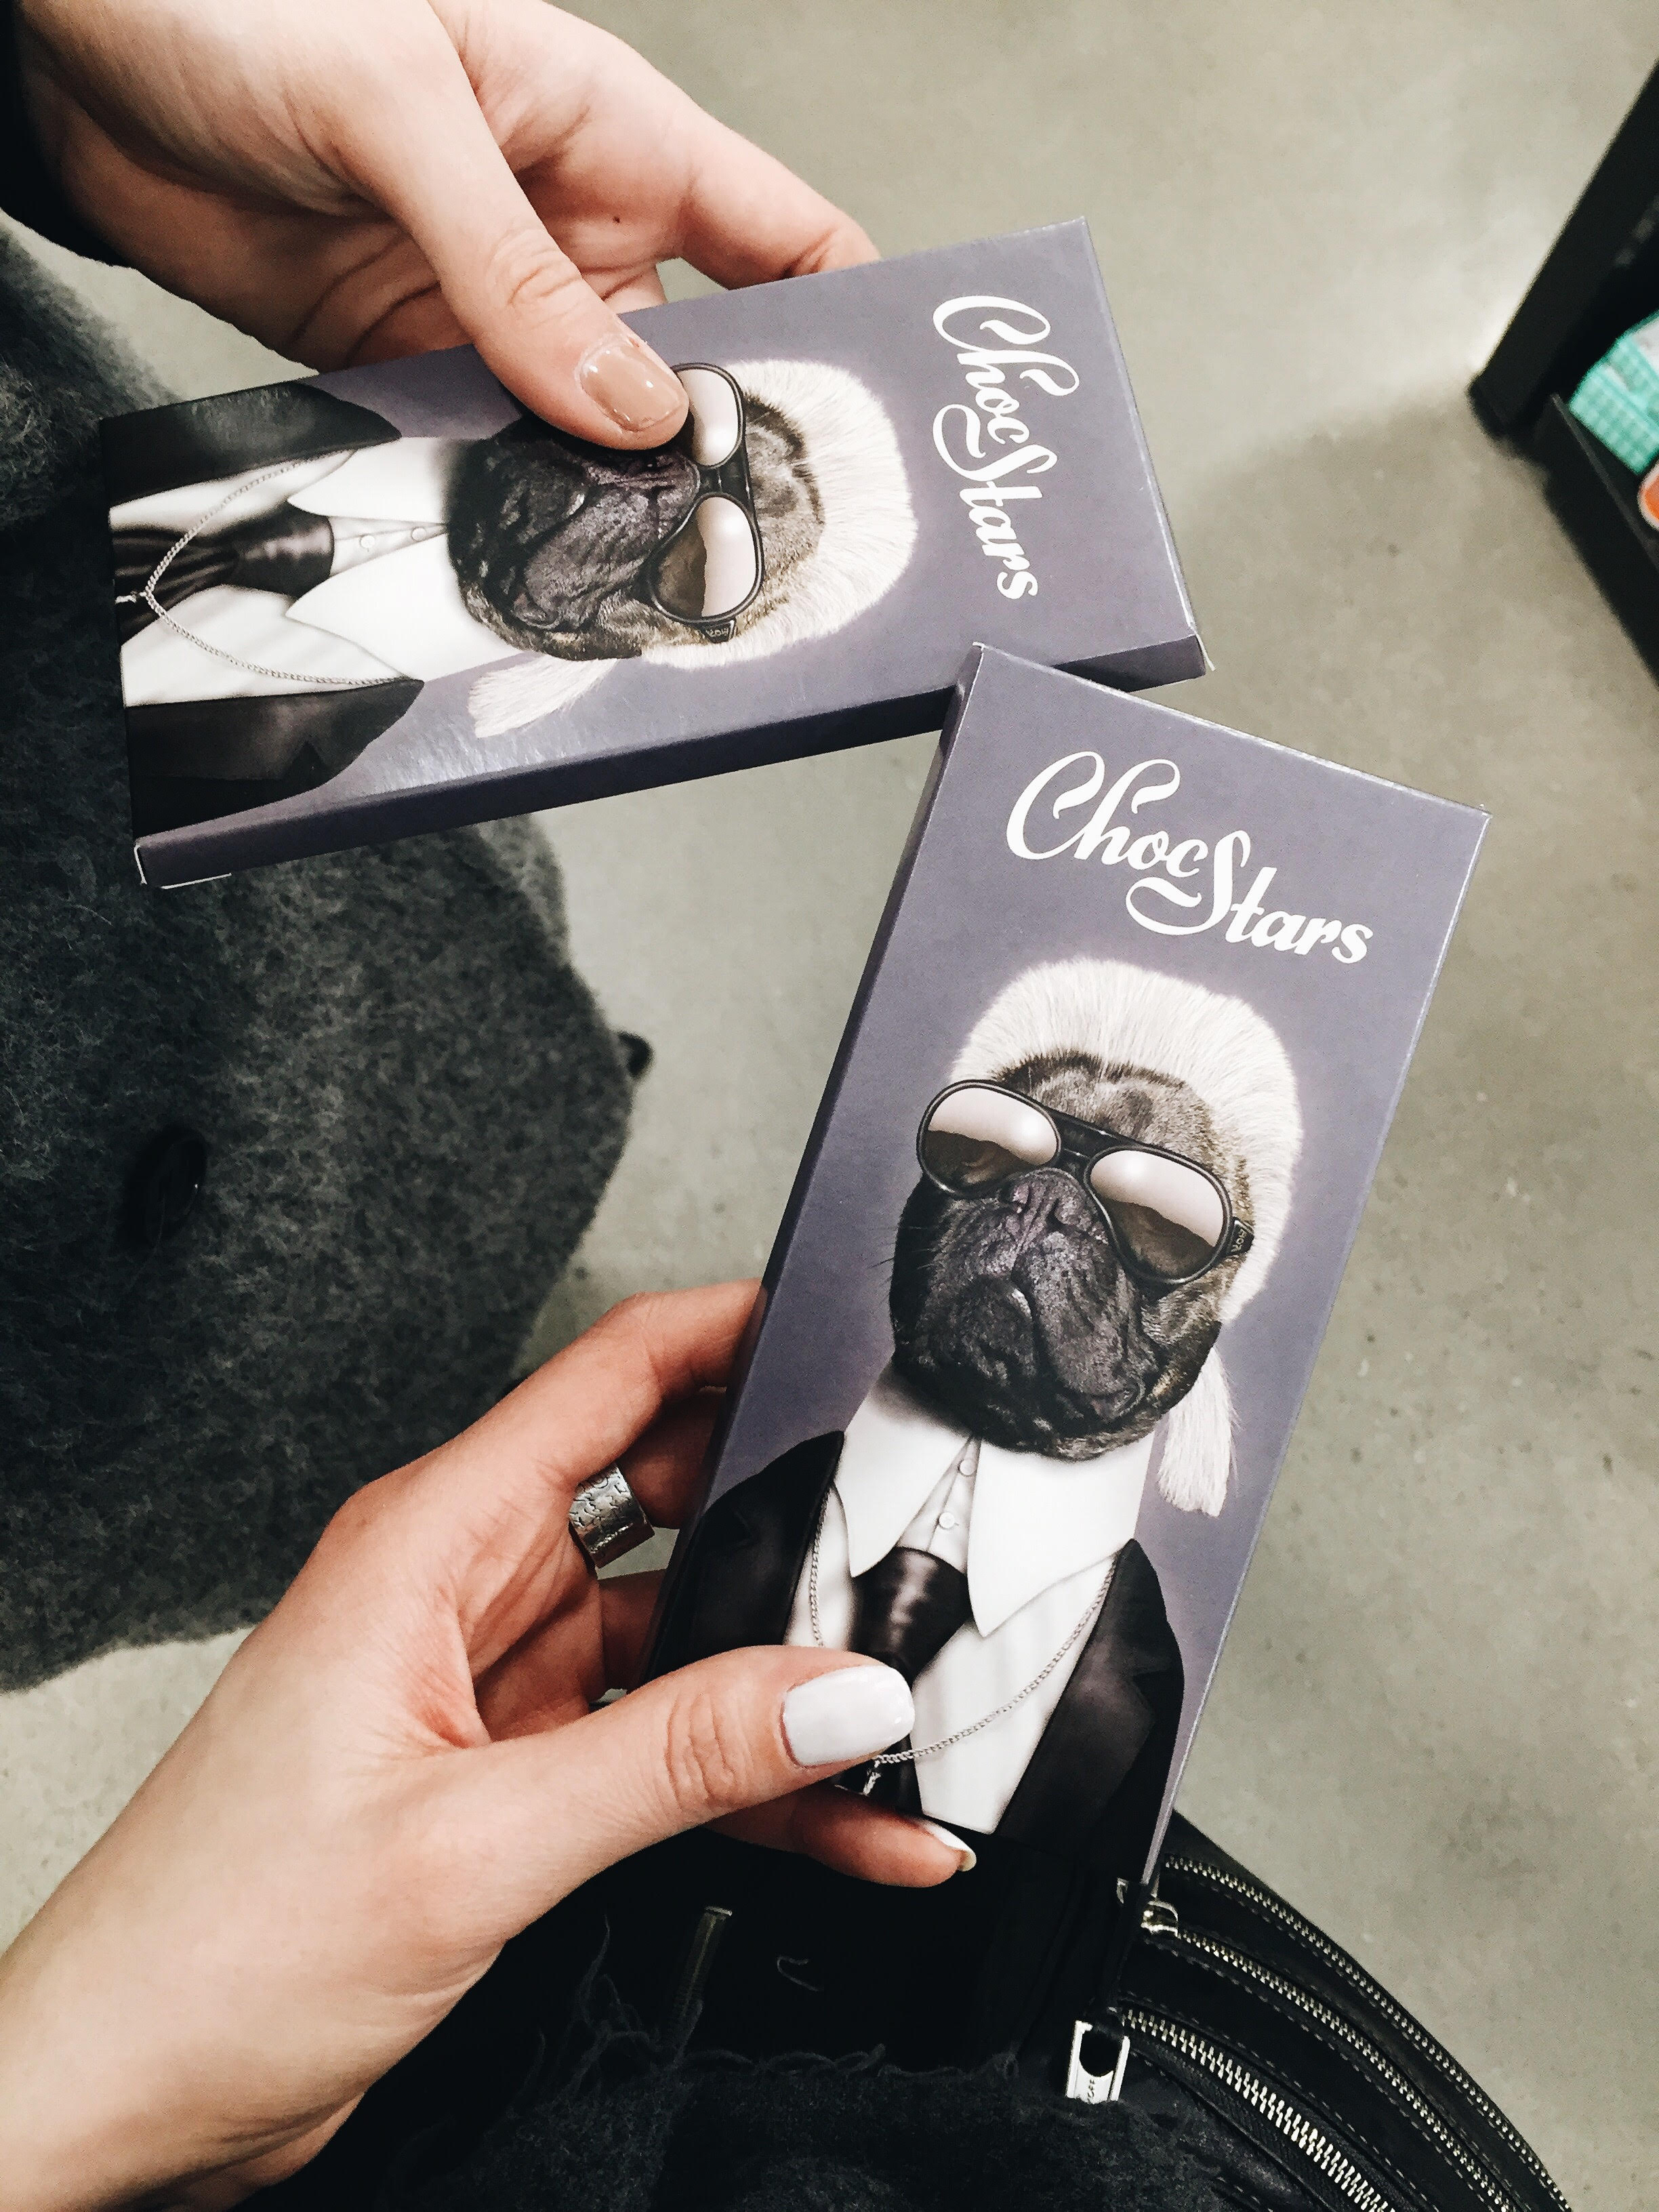 Karl Lagerfeld Chocolate Choco Stars Saks Off Fifth Ottawa Tanger Outlets Ottawa Style Fashion